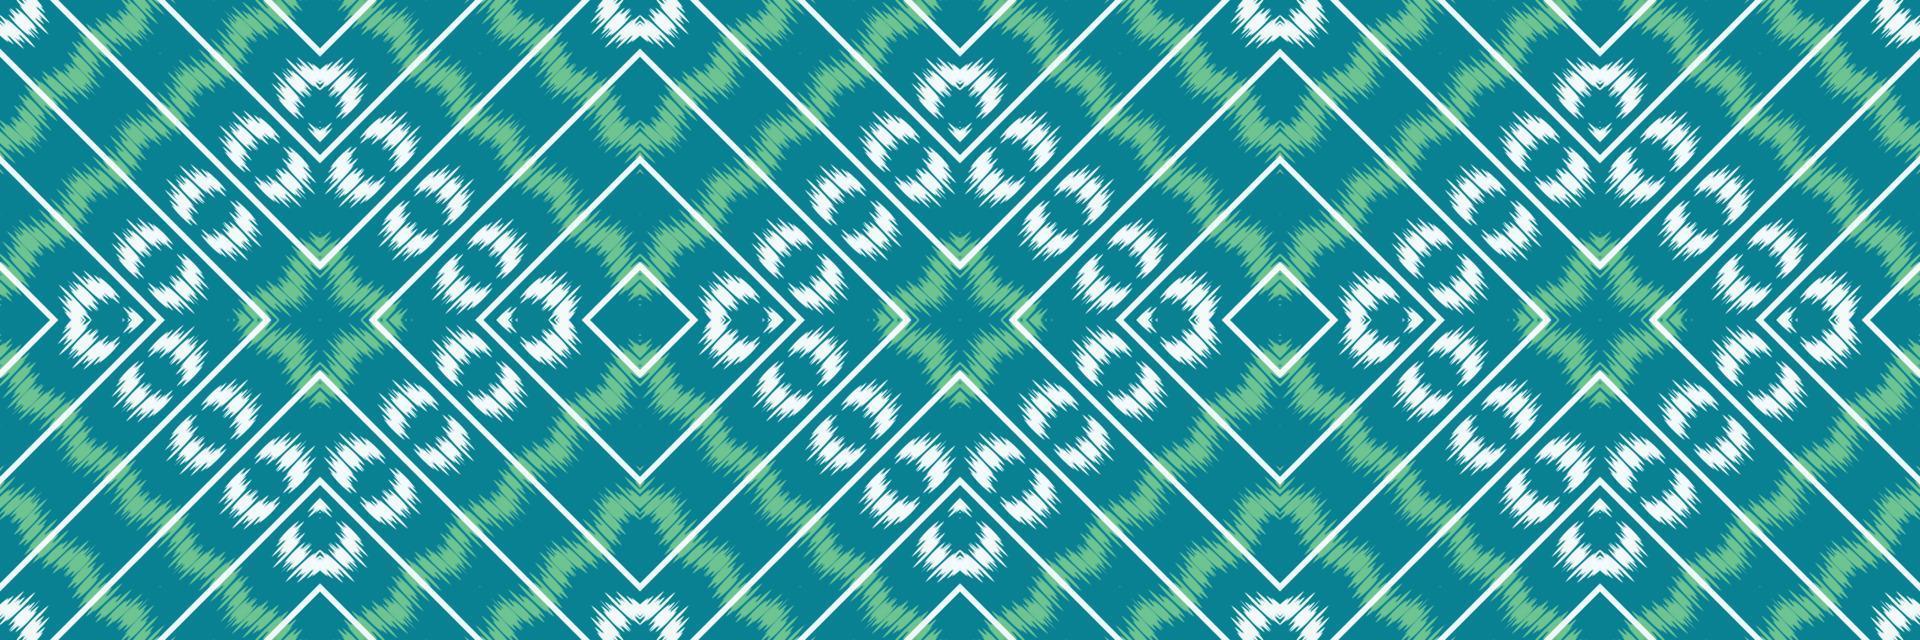 étnico ikat textura batik textil patrón sin costuras diseño de vector digital para imprimir saree kurti borde de tela símbolos de pincel de borde muestras de algodón